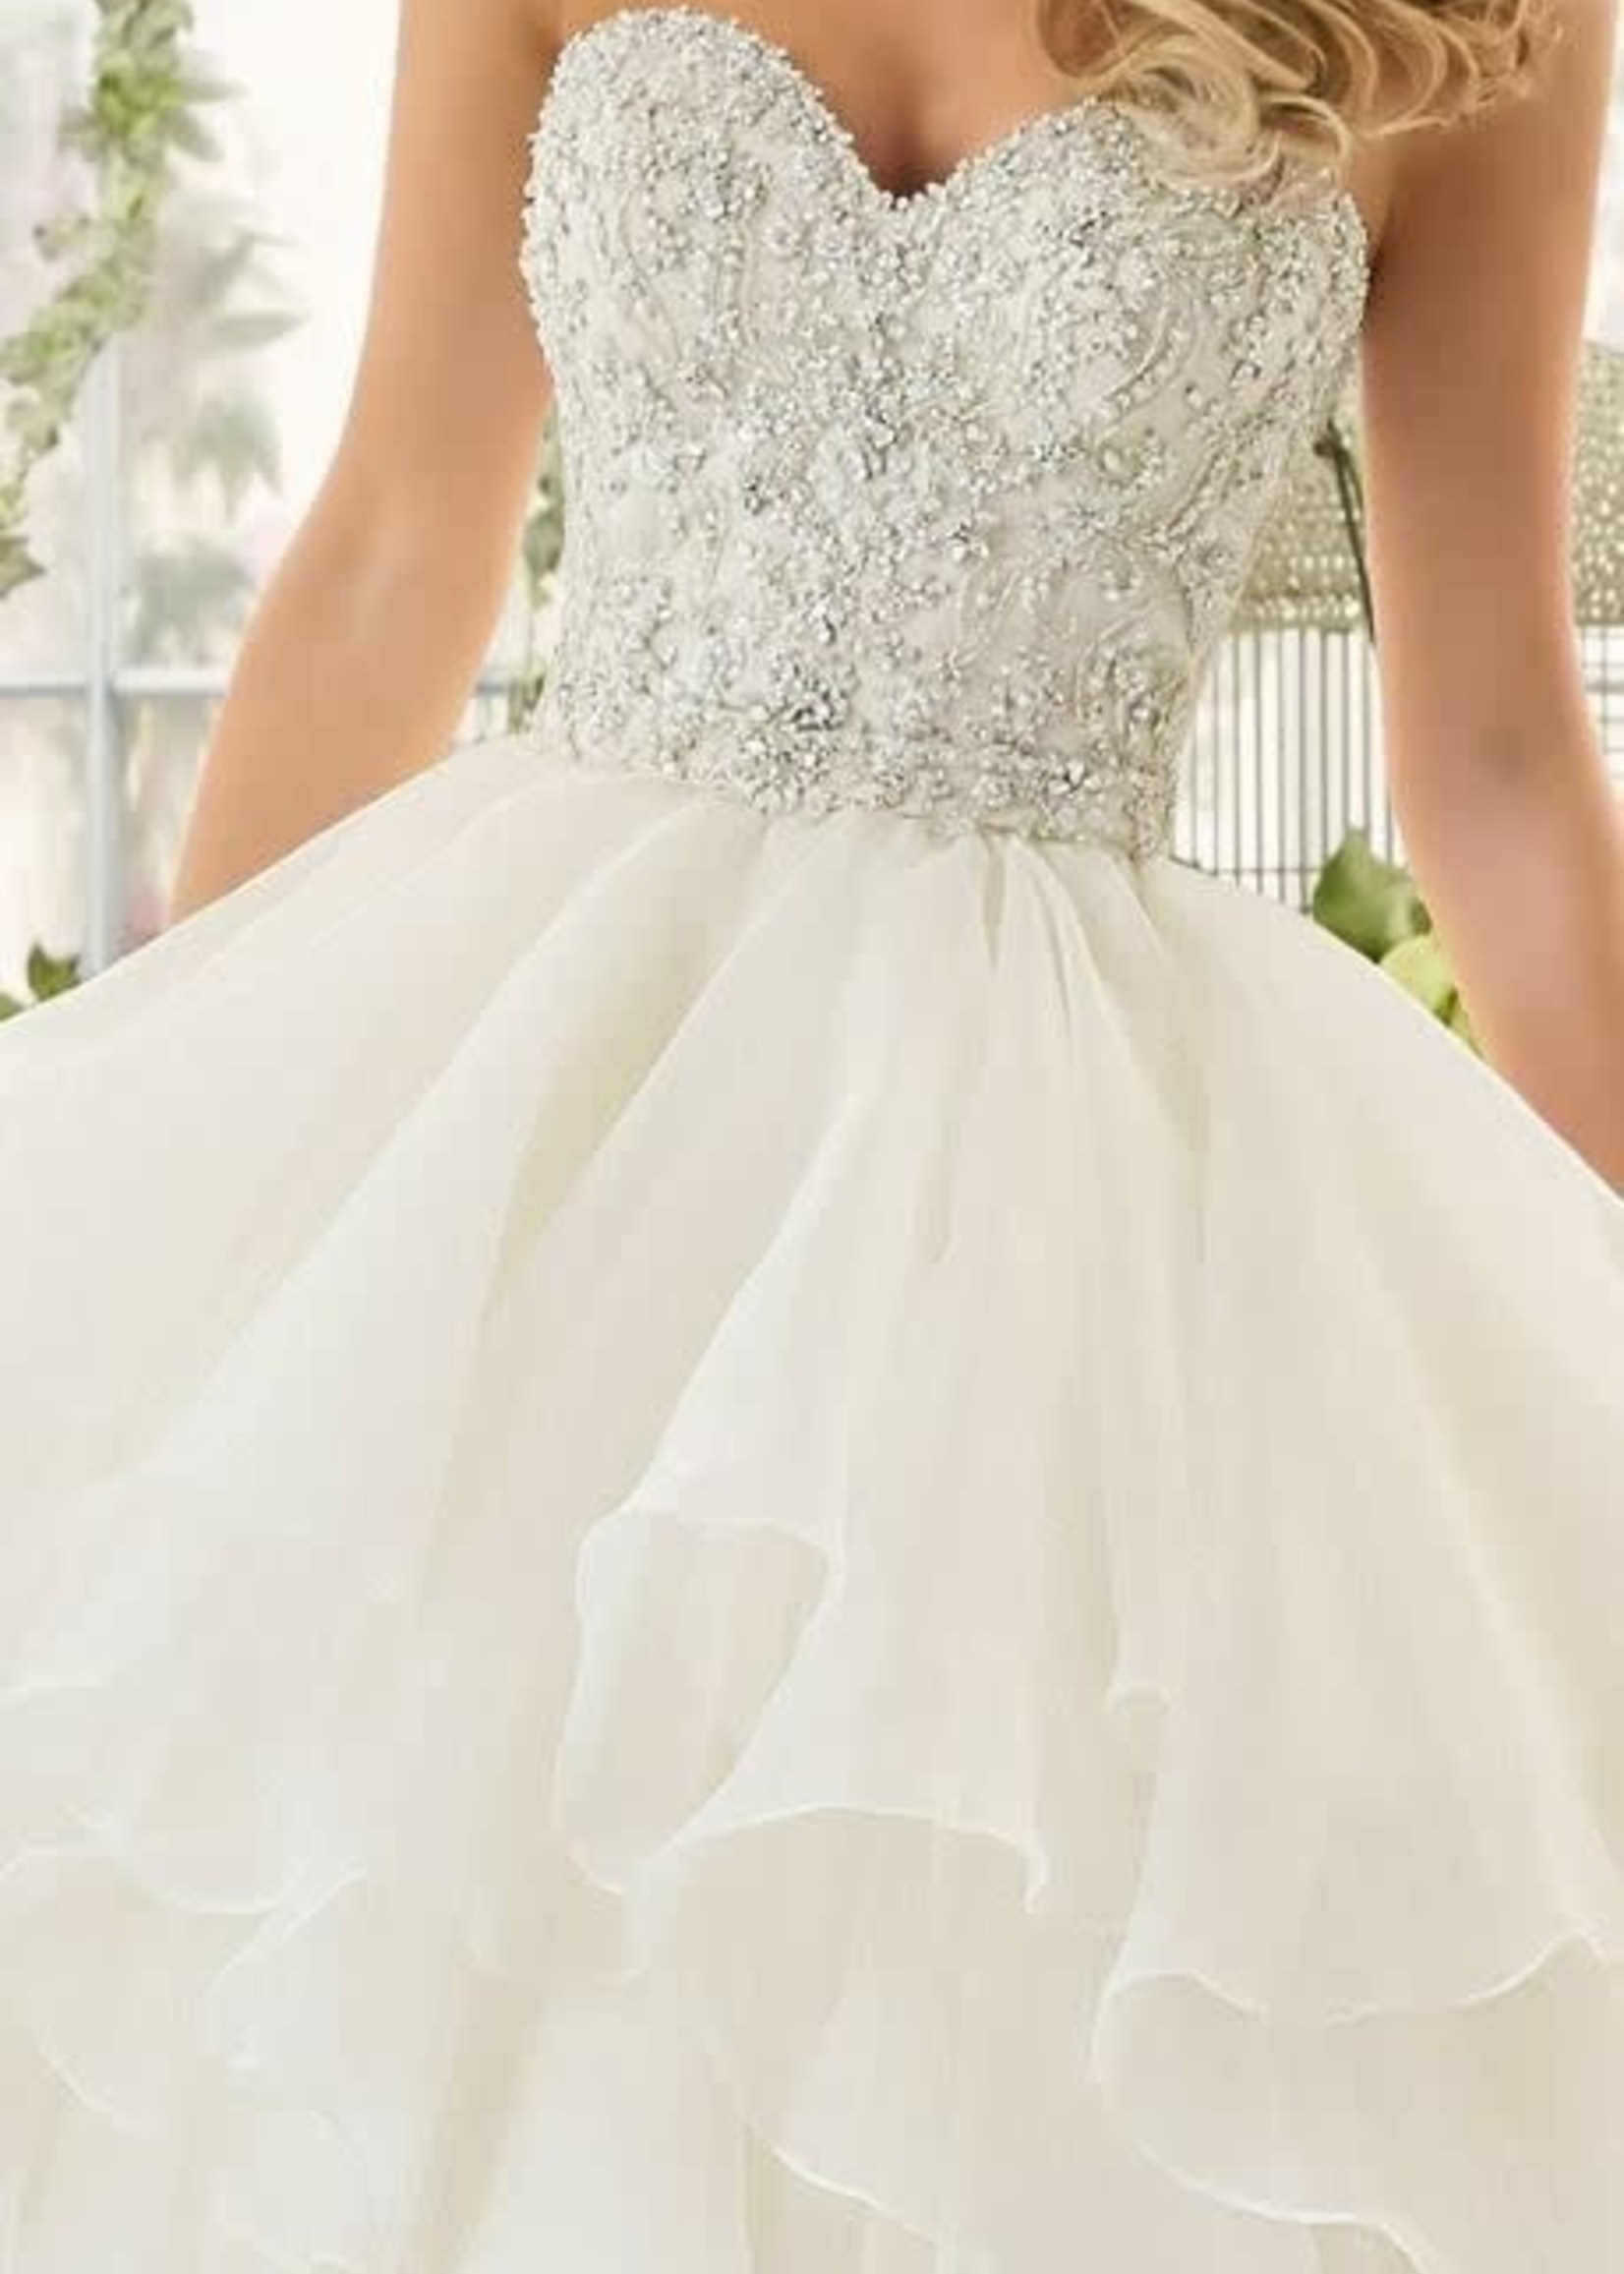 Morilee Bridal 2815 Bridal Dress Size 6